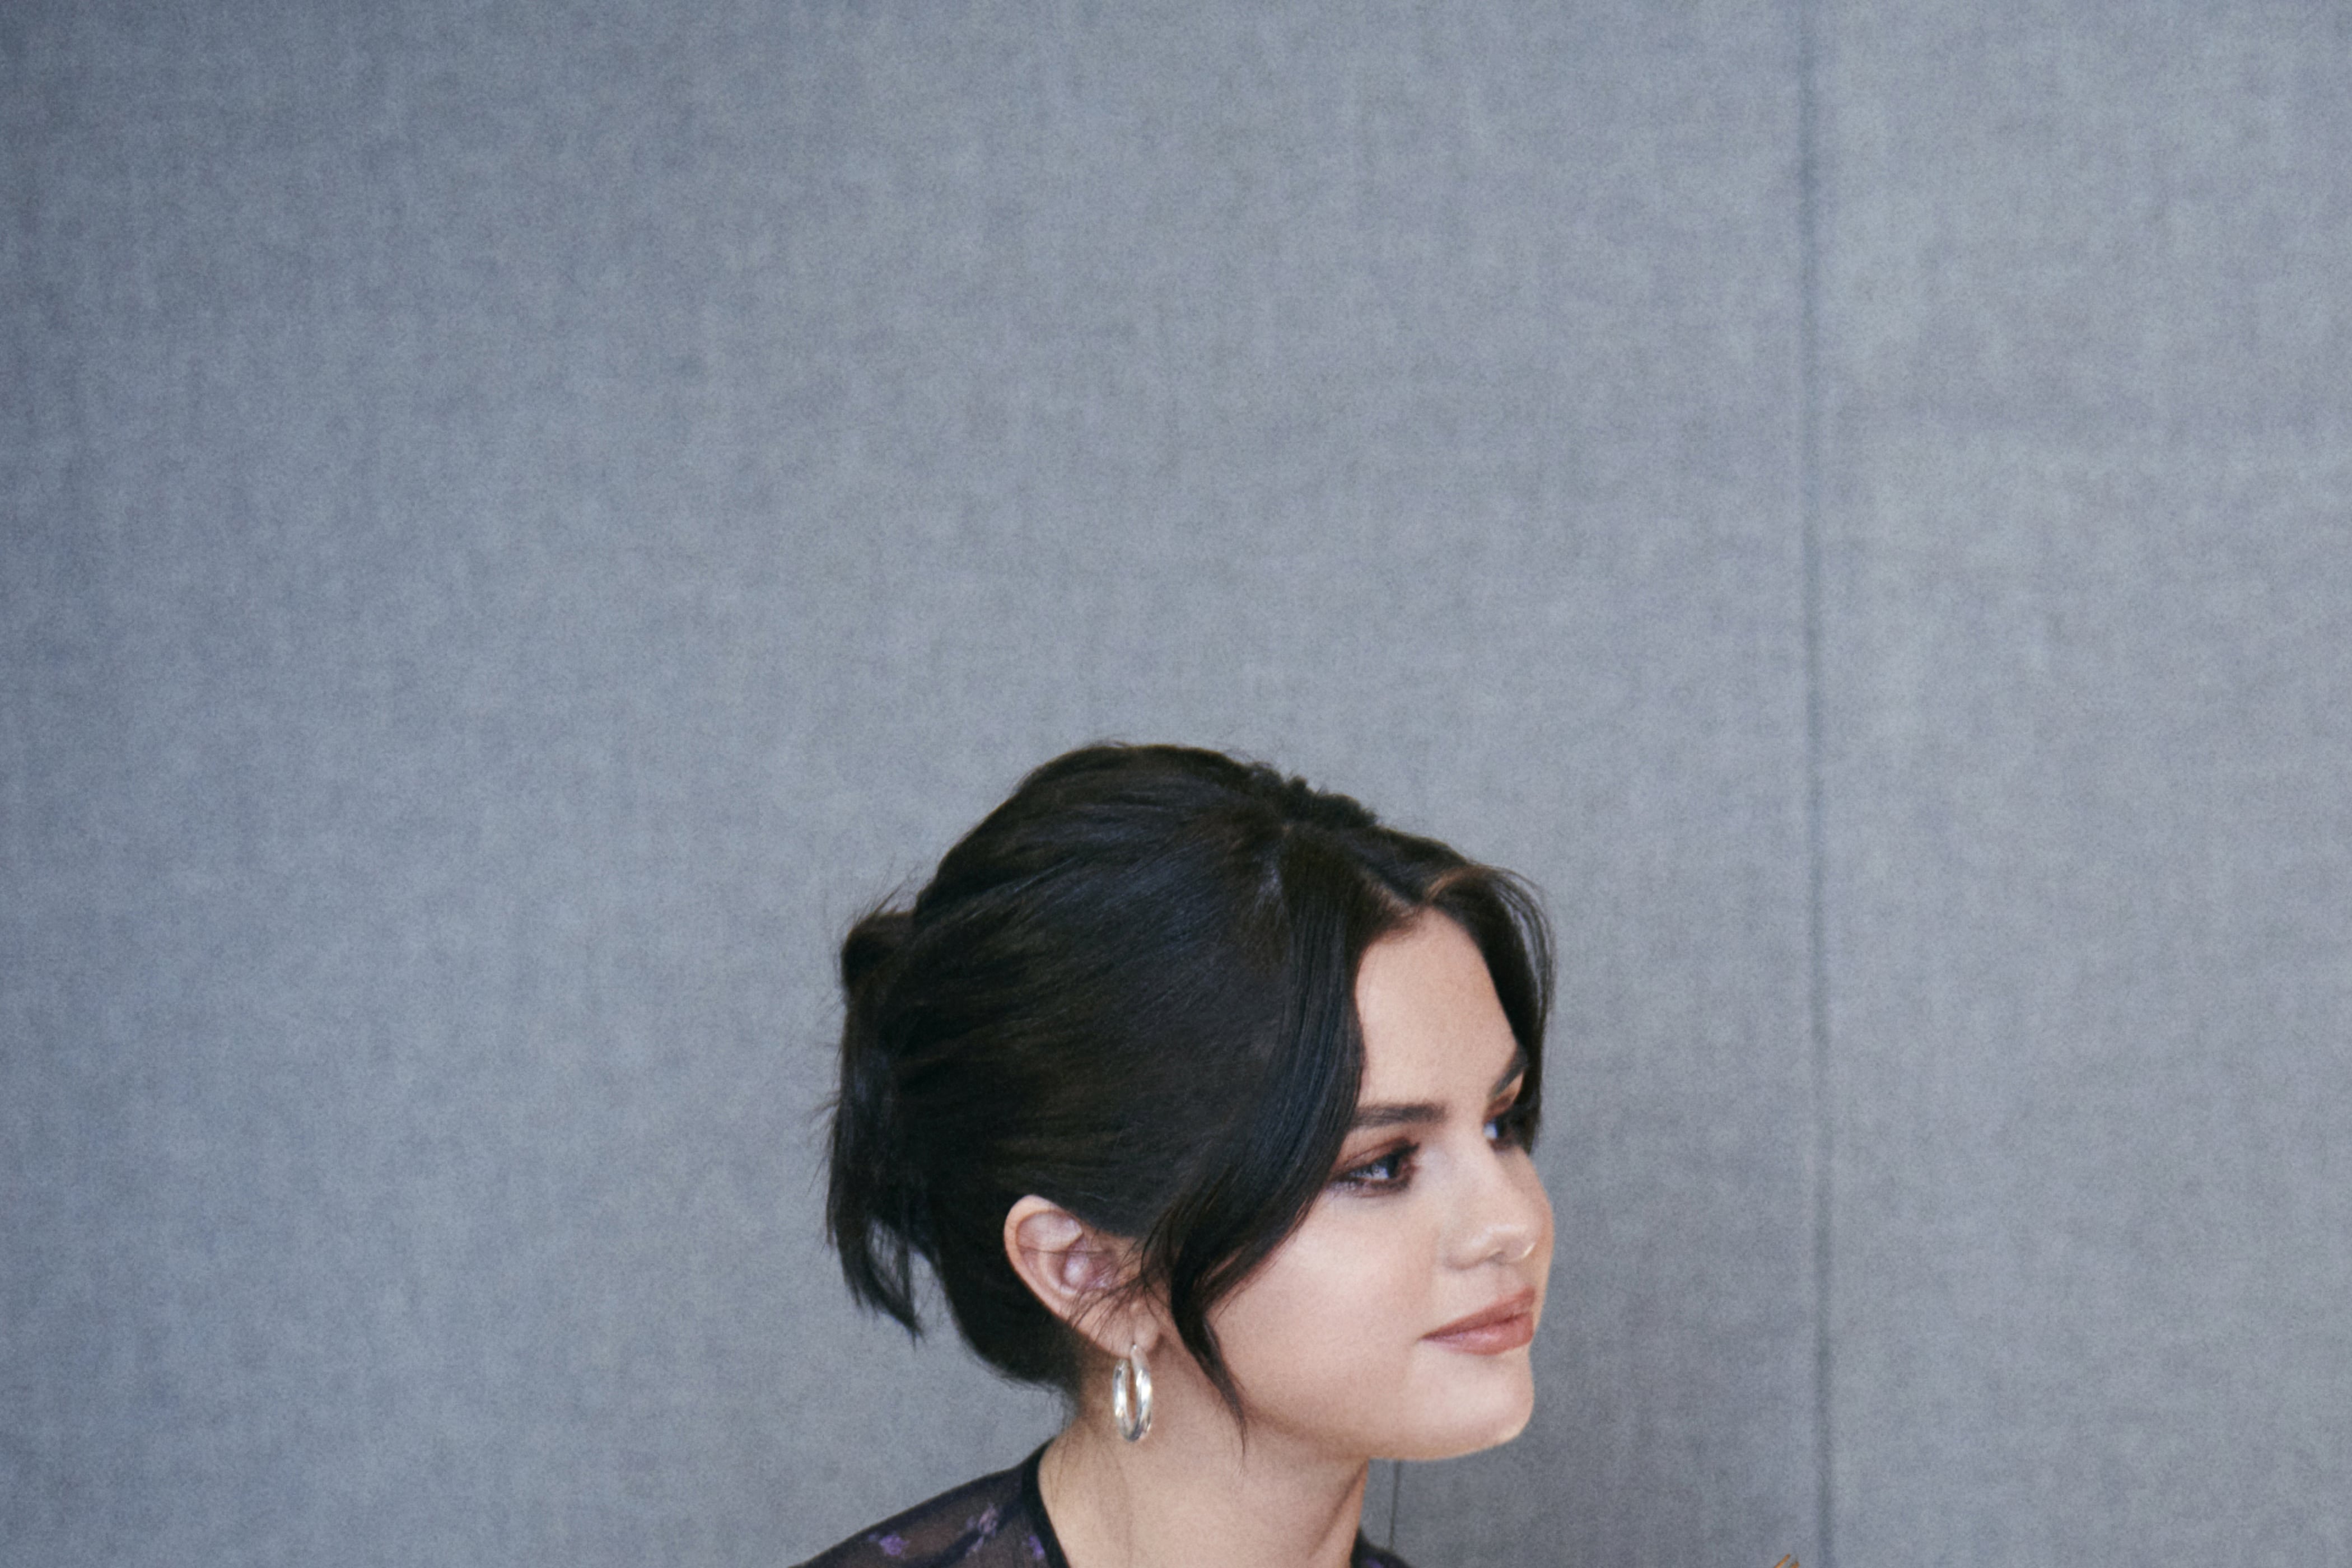 Selena Gomez's Black Floral Dress on Coach Podcast 2019